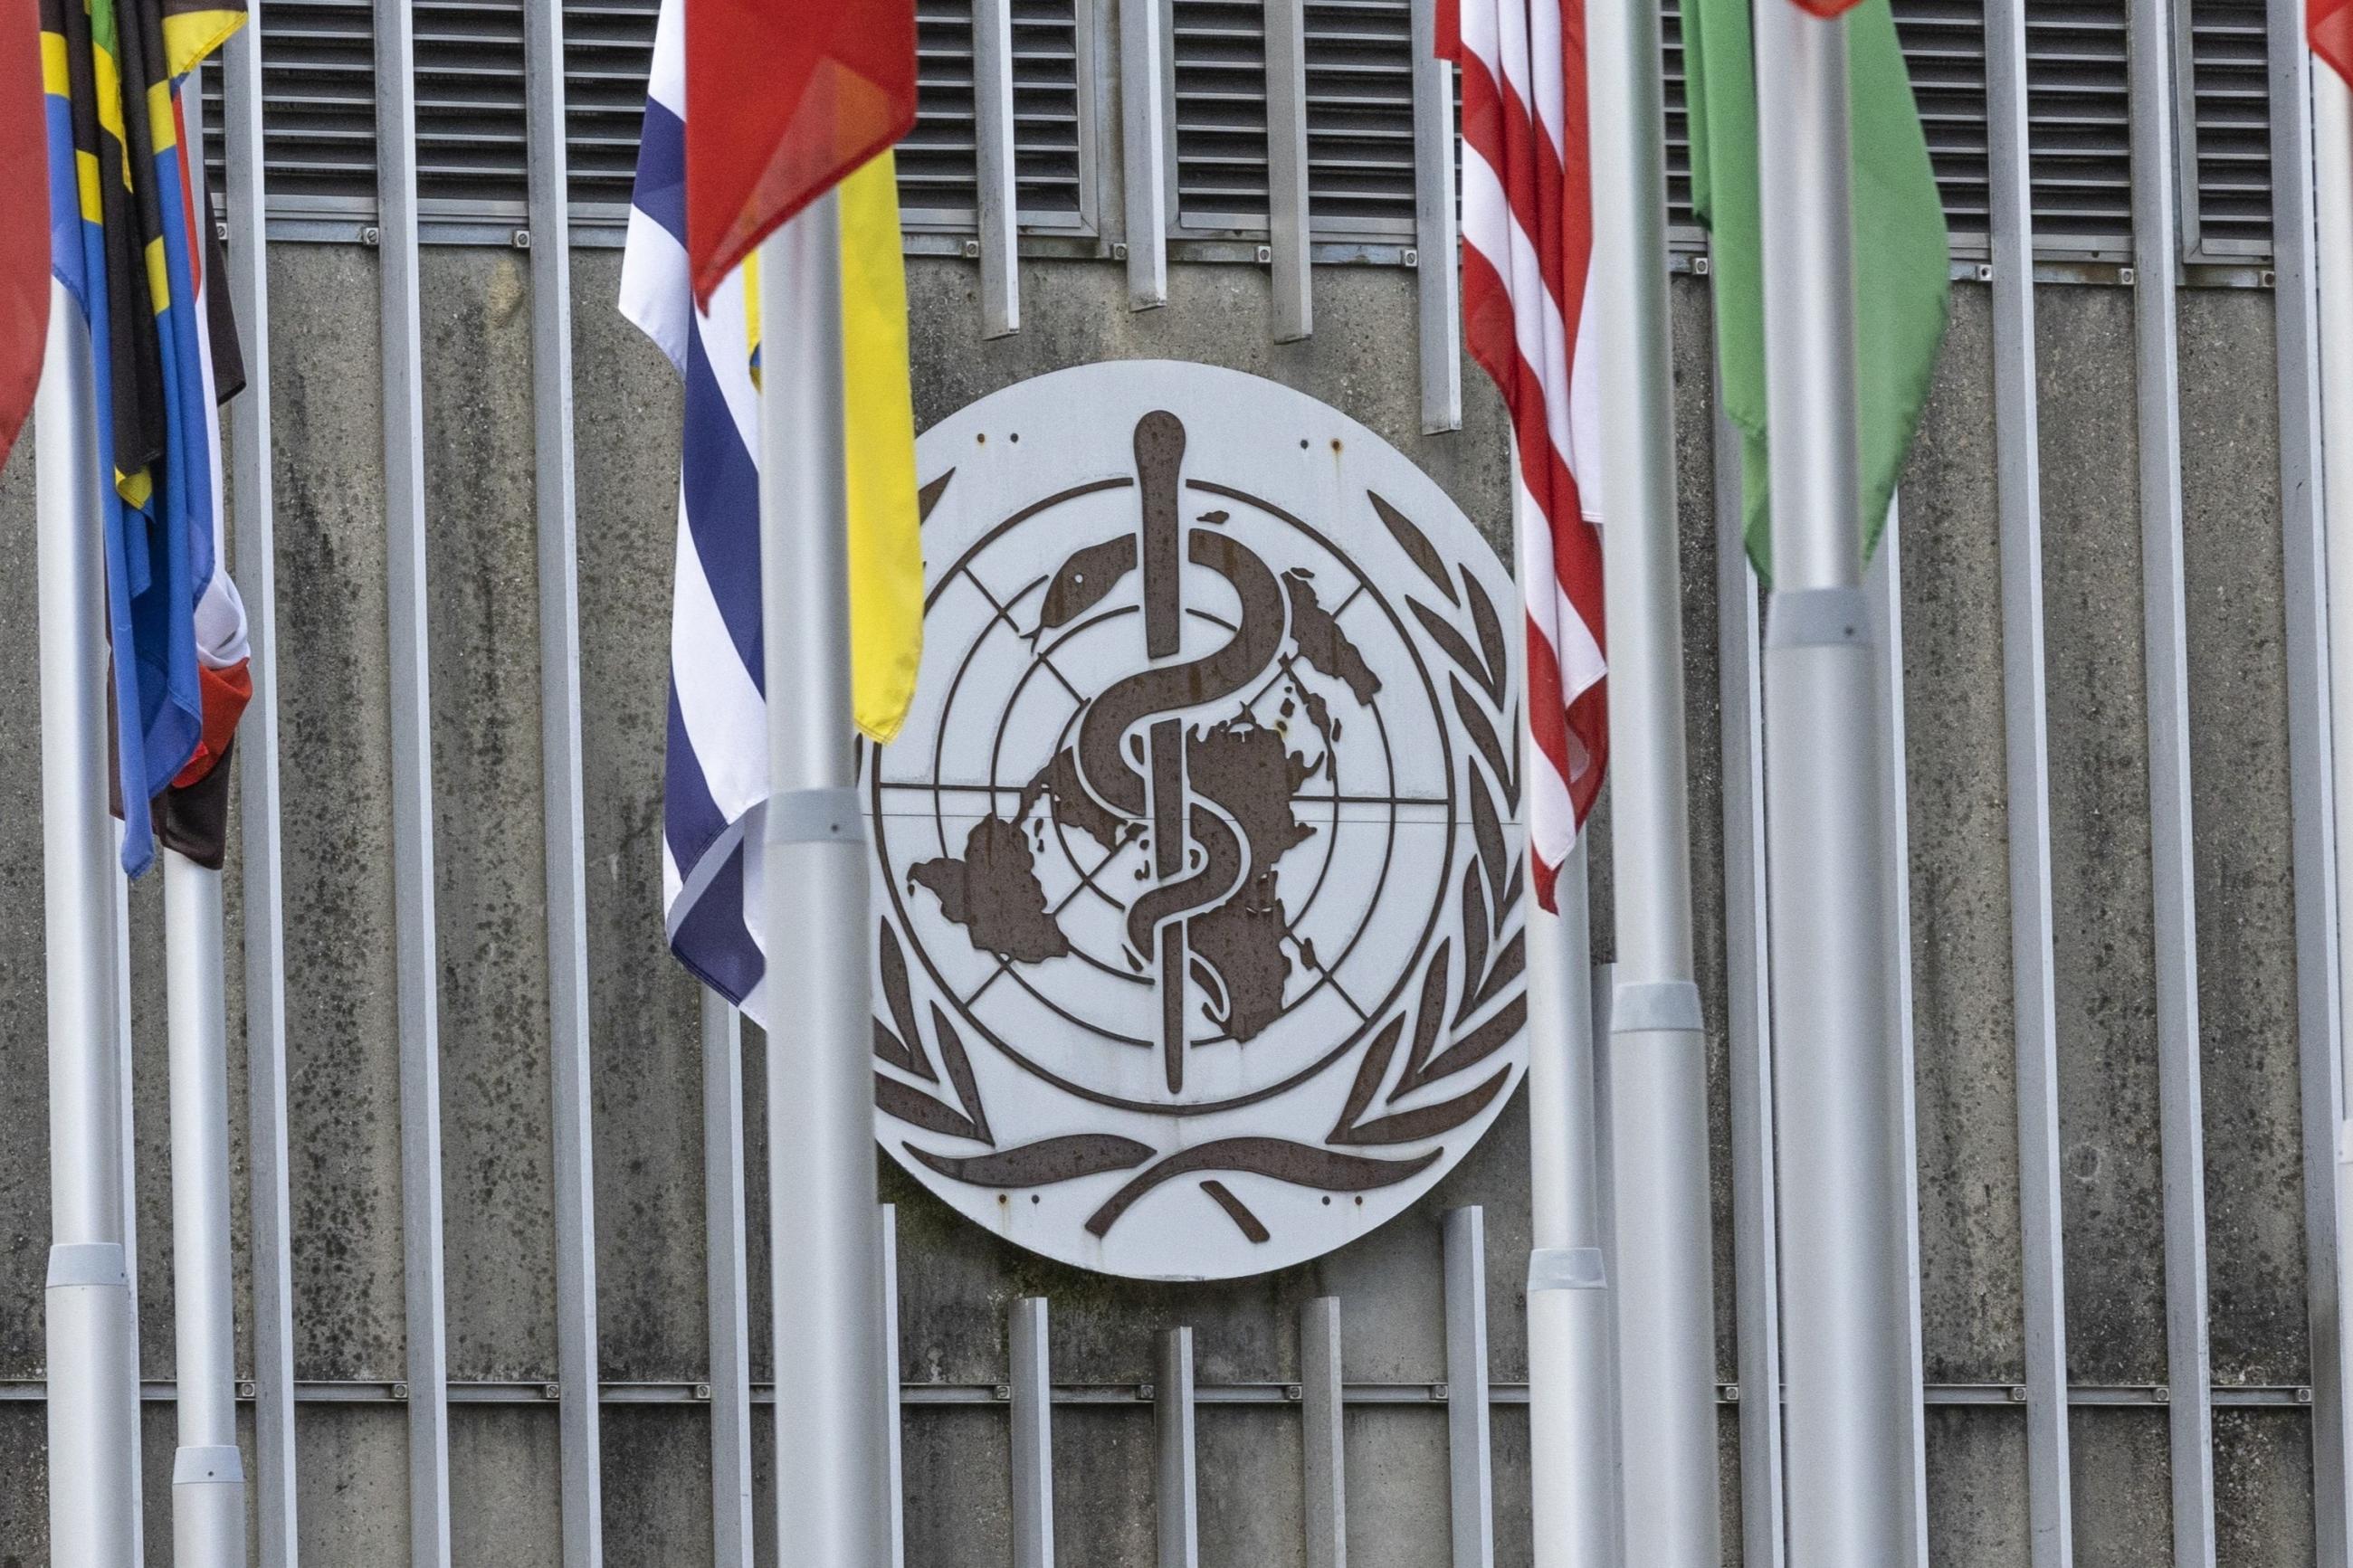 The World Health Organization (WHO) logo is seen near its headquarters.